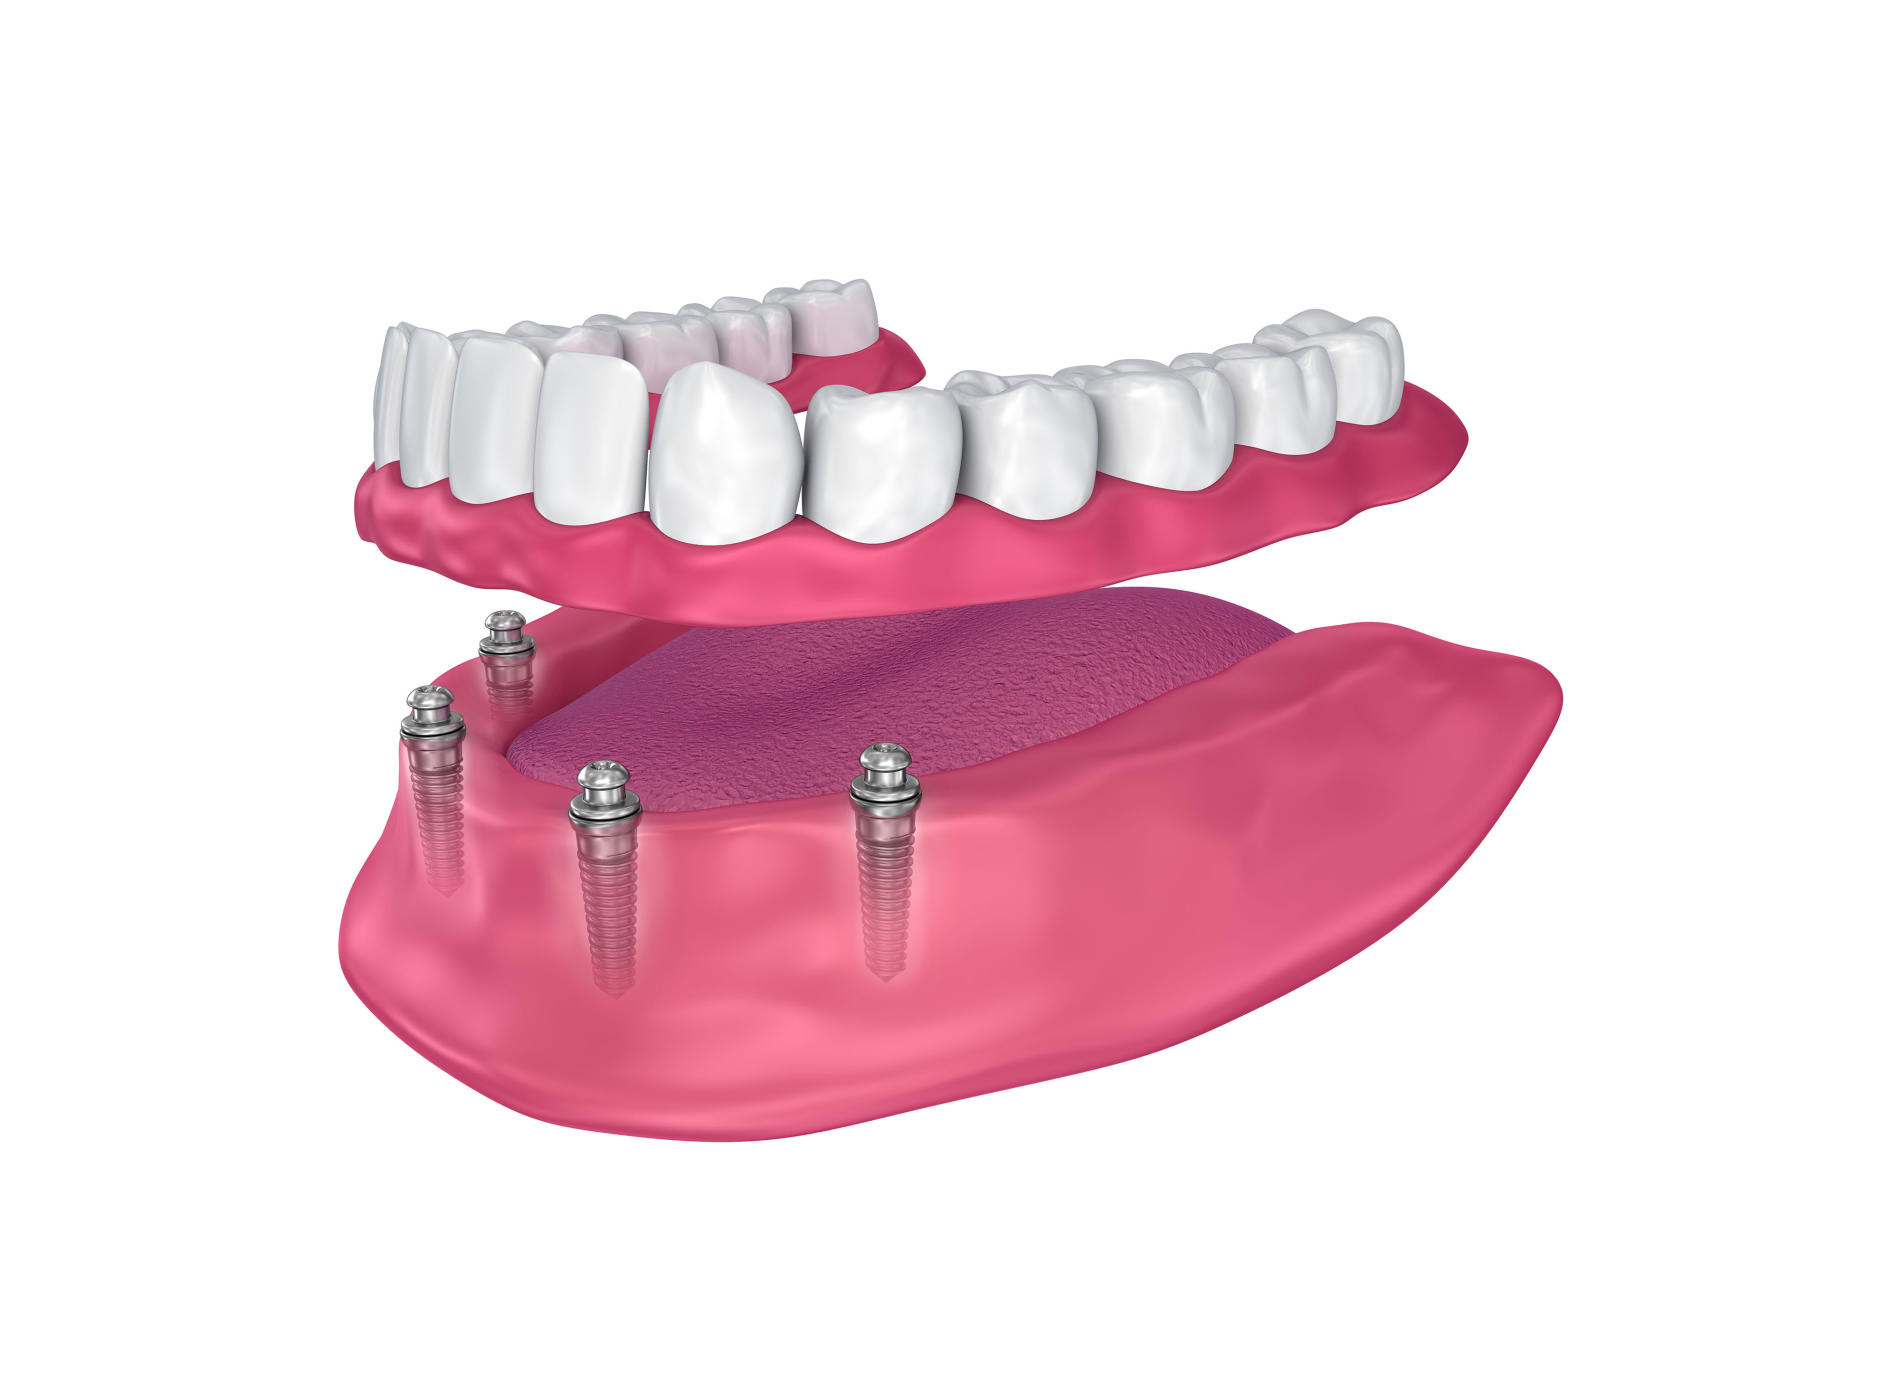 3D image of all-on-4 dental implants.